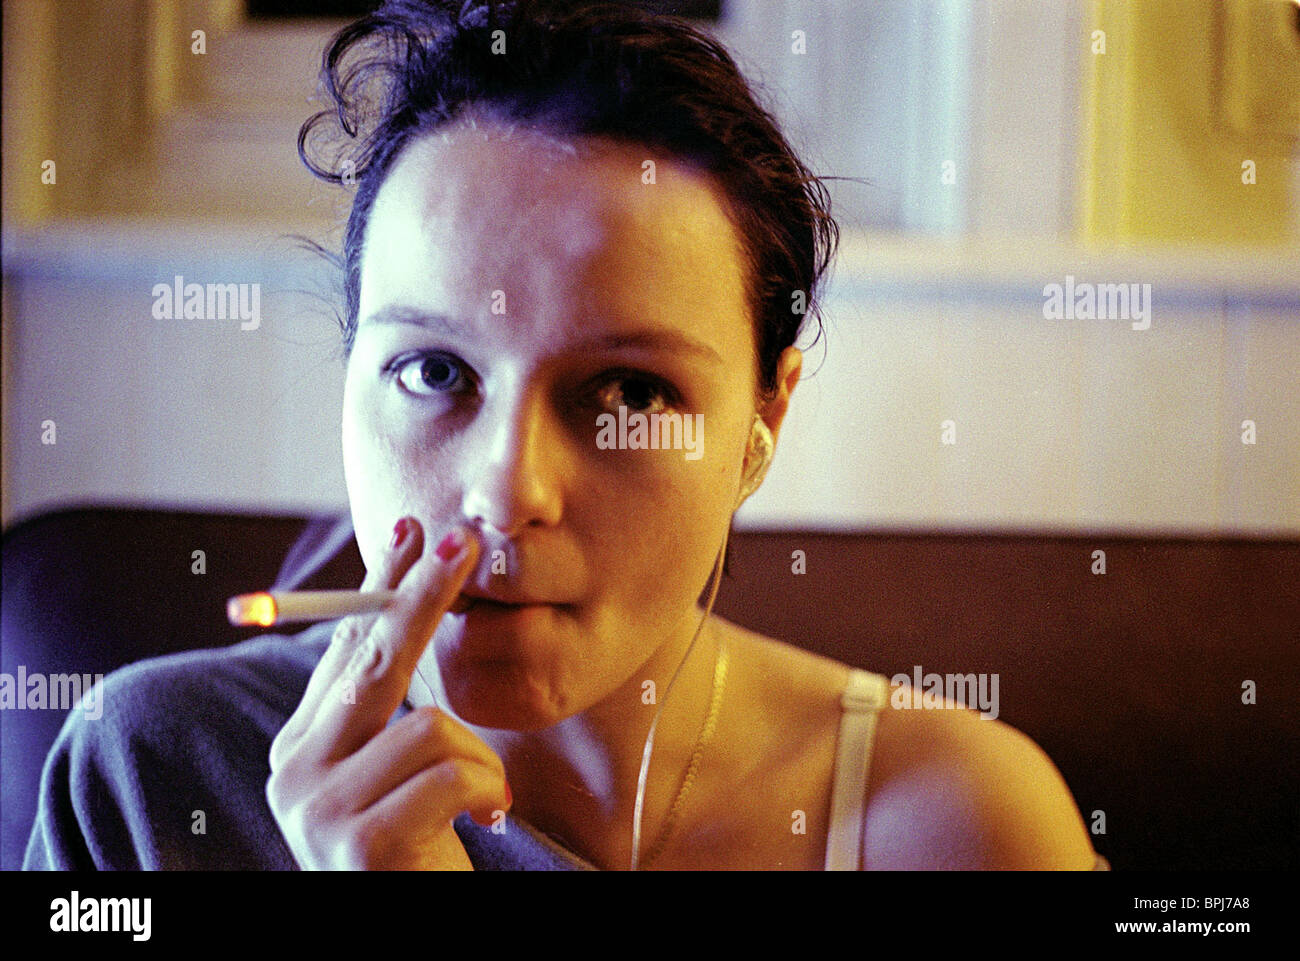 Samantha Morton smoking a cigarette (or weed)
